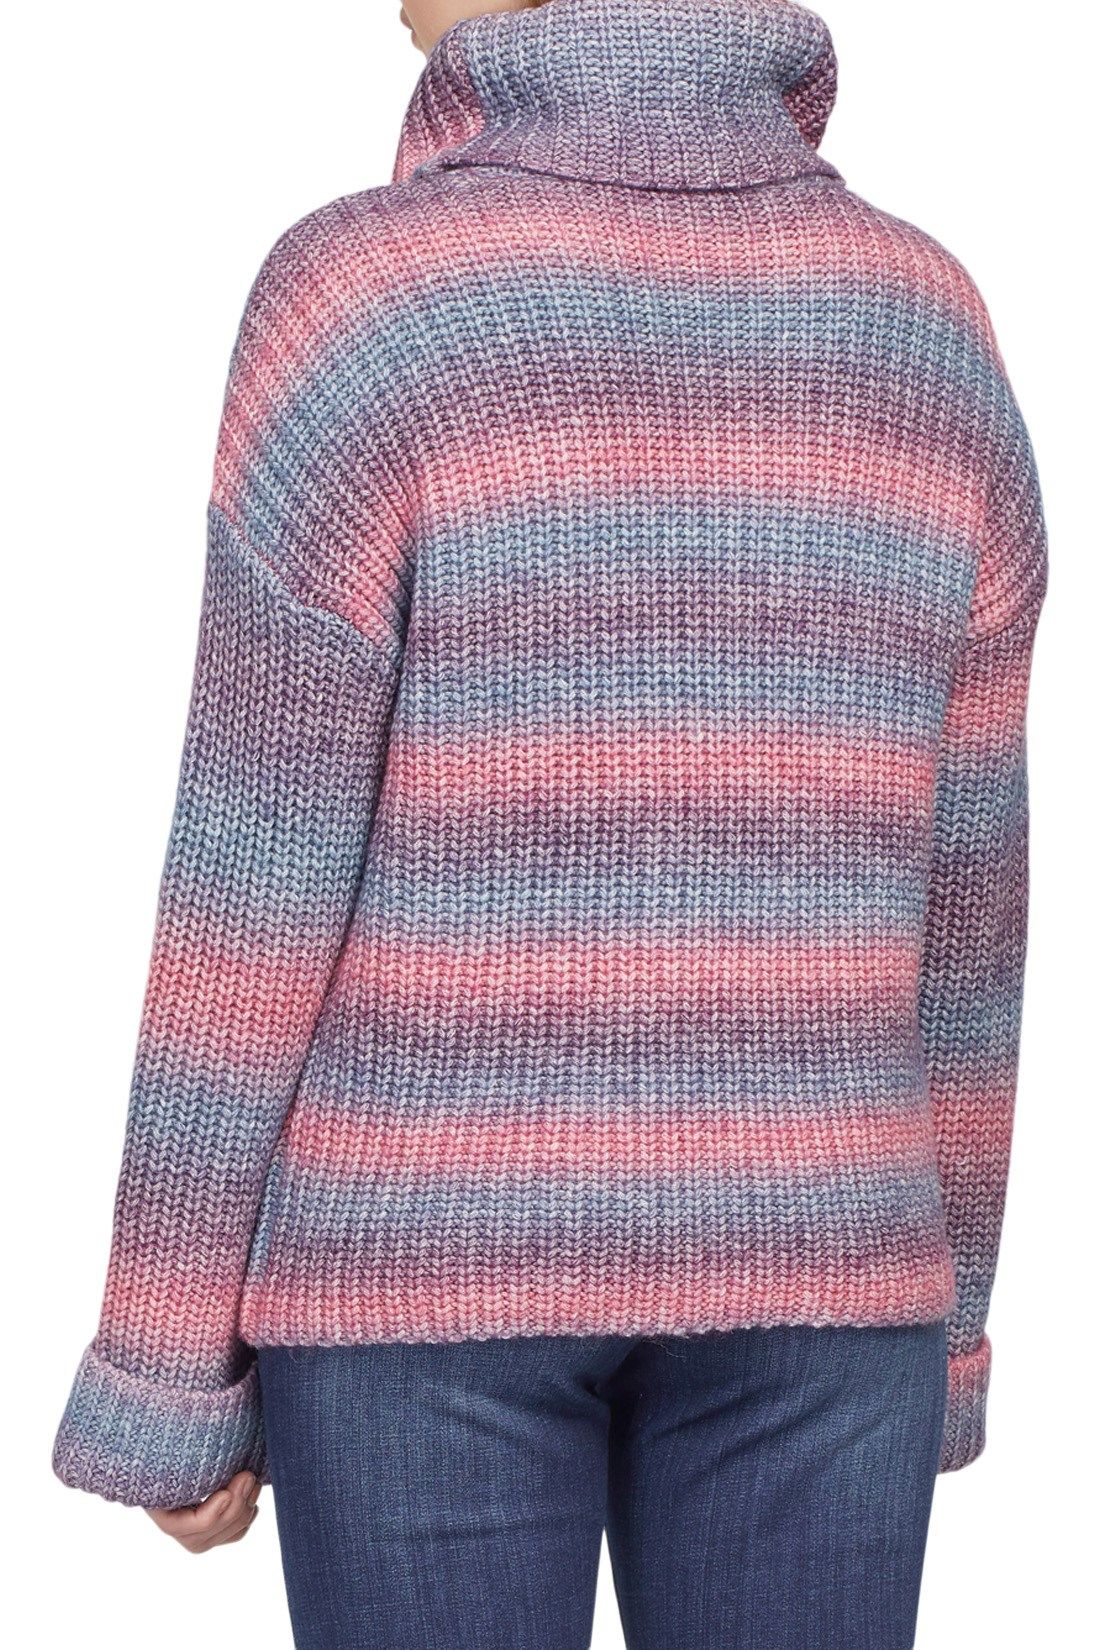 Space Dye Cowl Neck Sweater